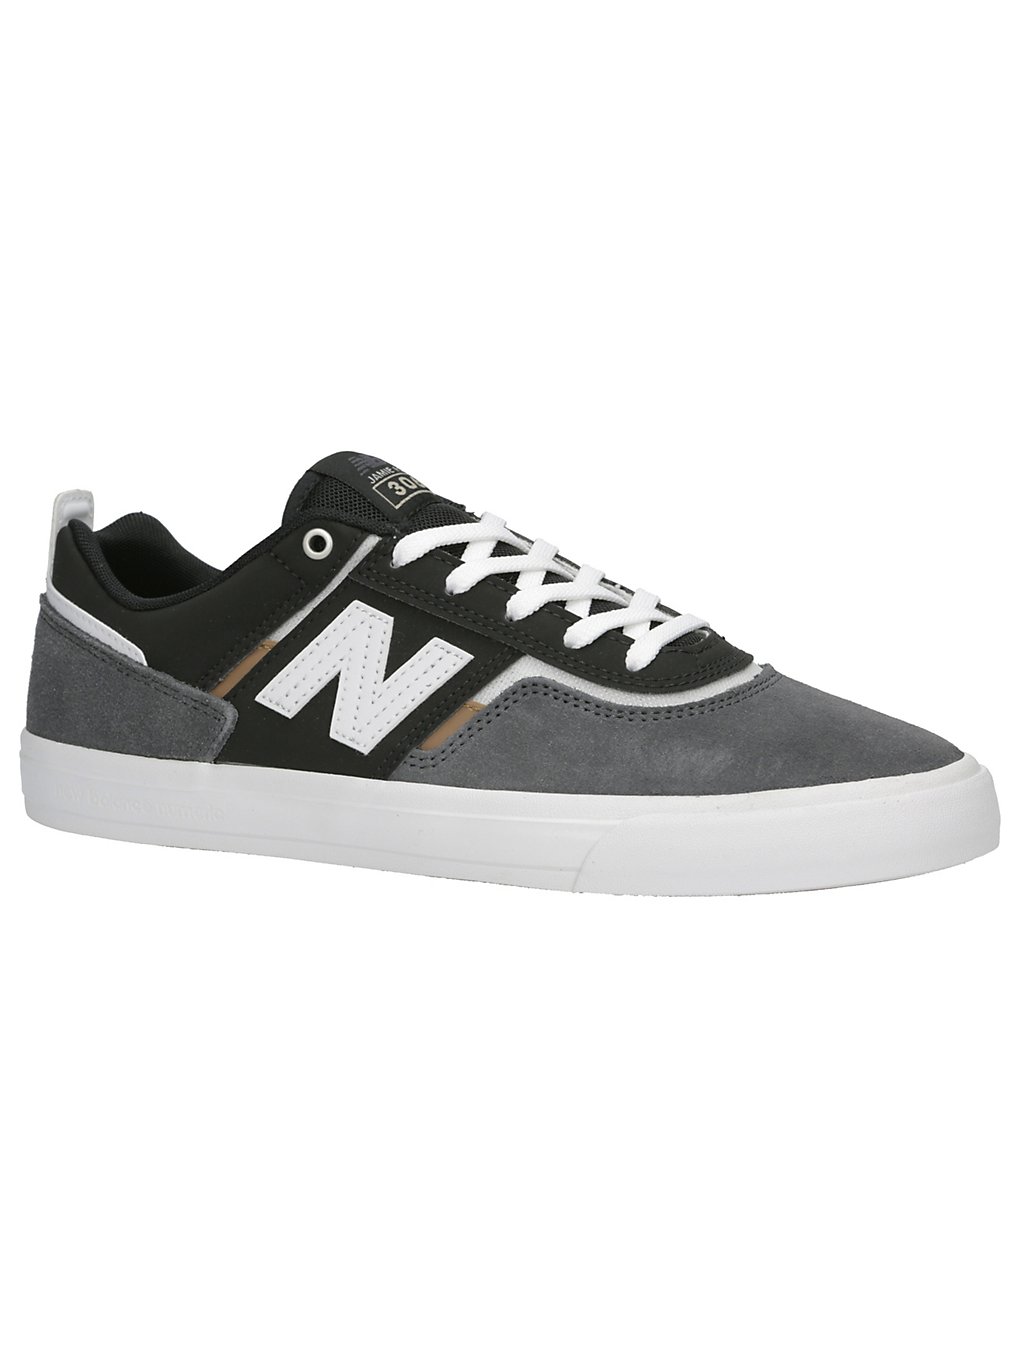 New Balance Numeric NM306 Skate Shoes black